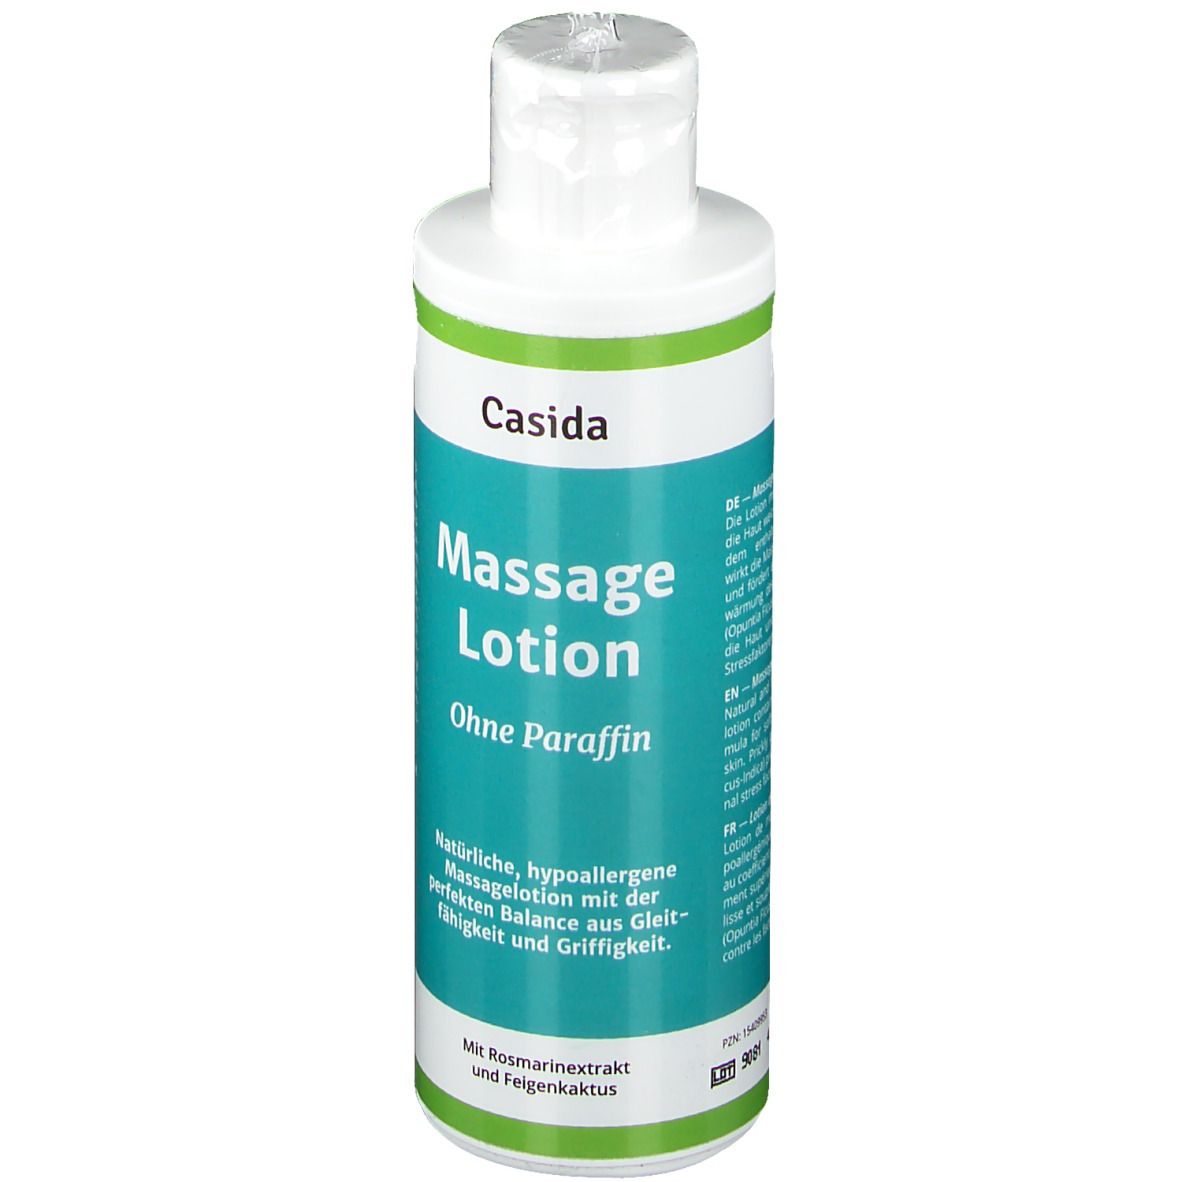 Casida Massage Lotion ohne Paraffin